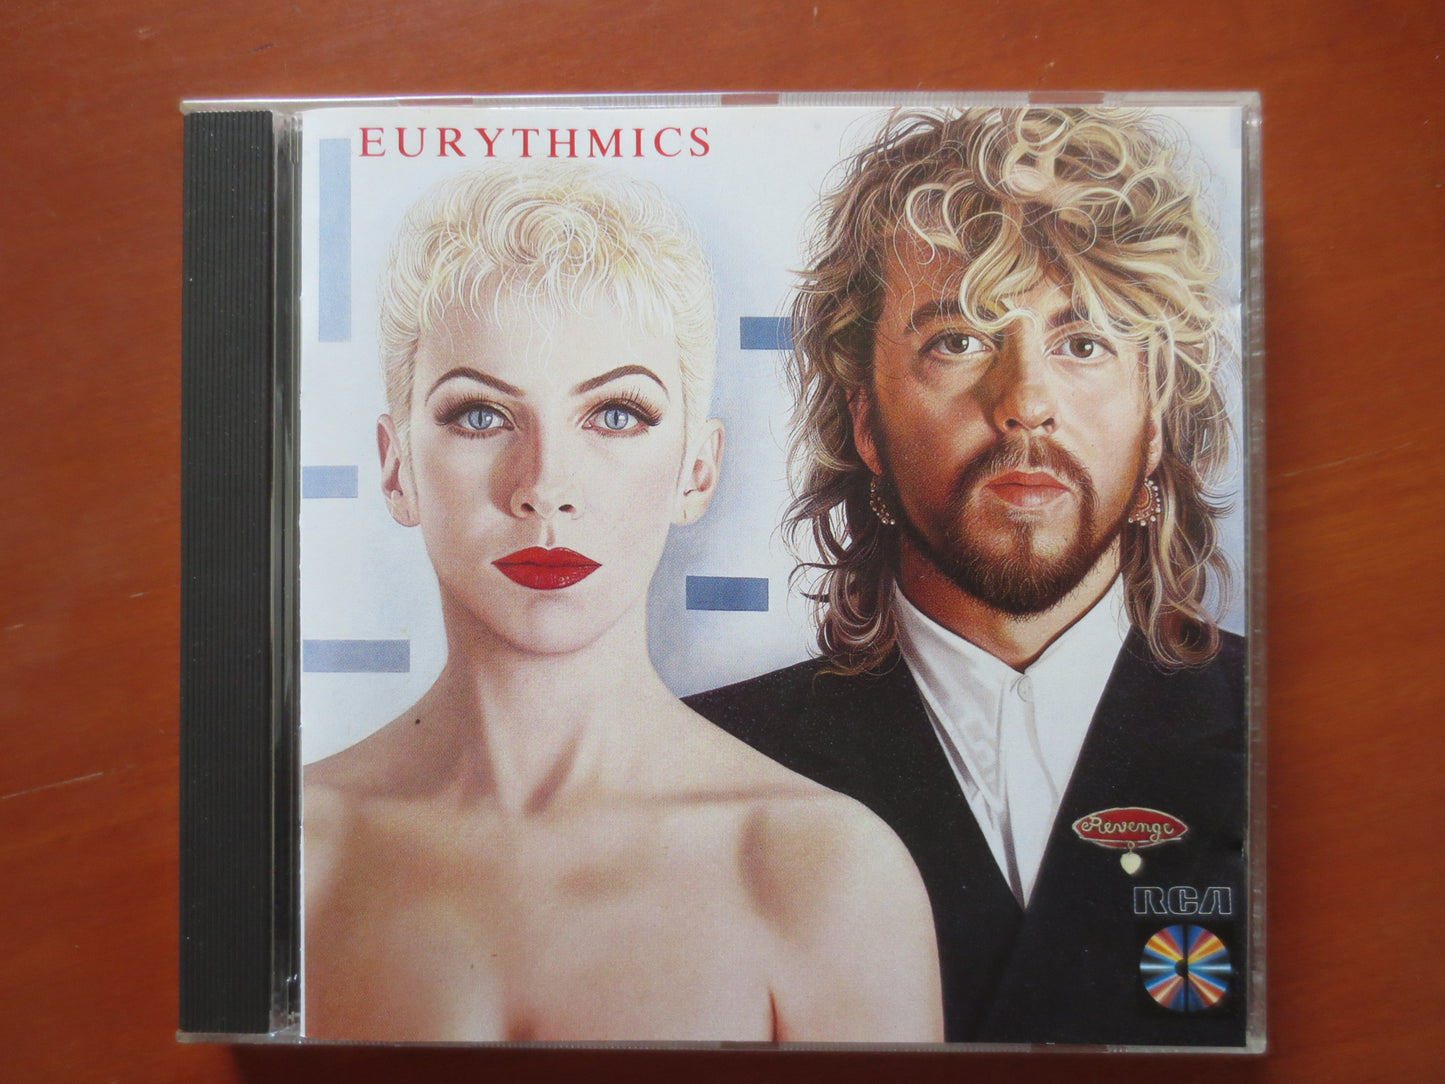 EURYTHMICS, Revenge, EURYTHMICS Cd, EURYTHMICS Lp, Rock Cd, Rock Music Cd, Vintage Compact Disc,  Pop Cd, 1986 Compact Discs